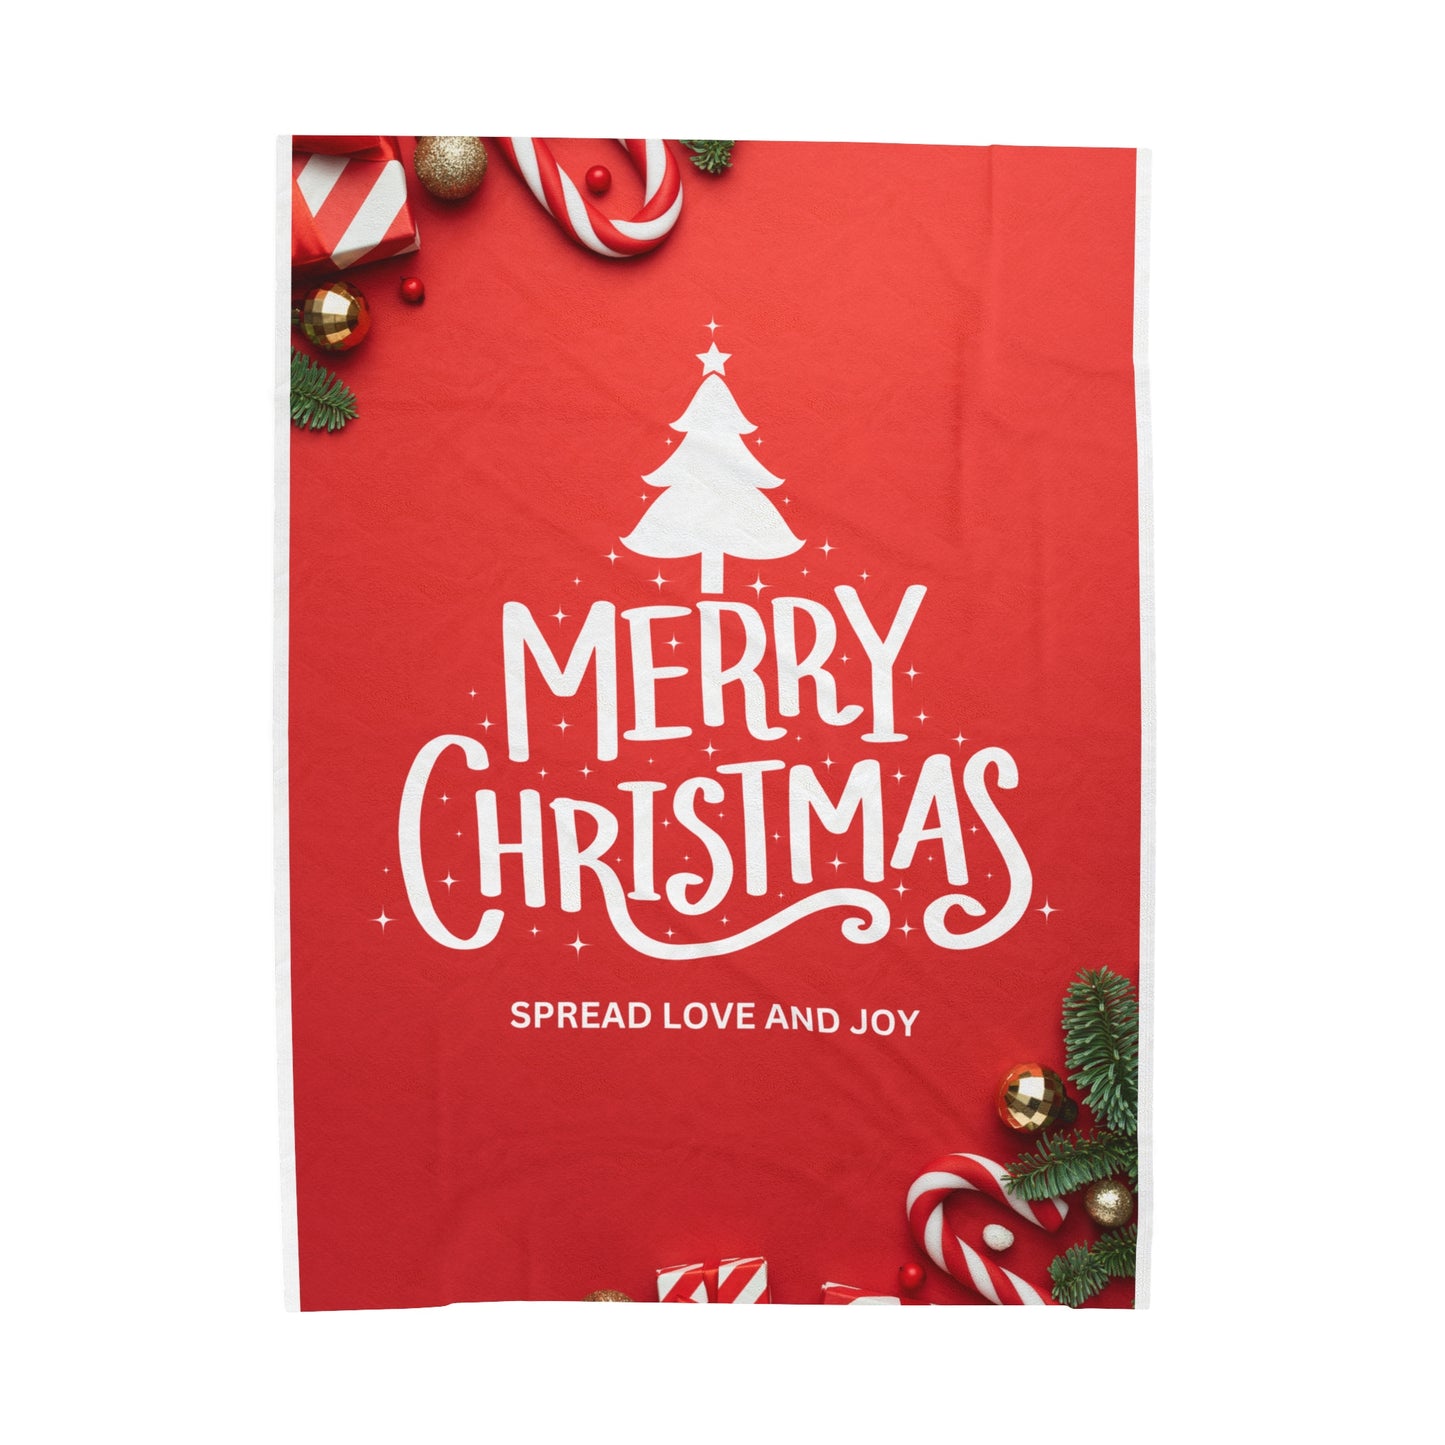 Merry Christmas with Spread Love and Joy Printed Velveteen Plsuh Blanket